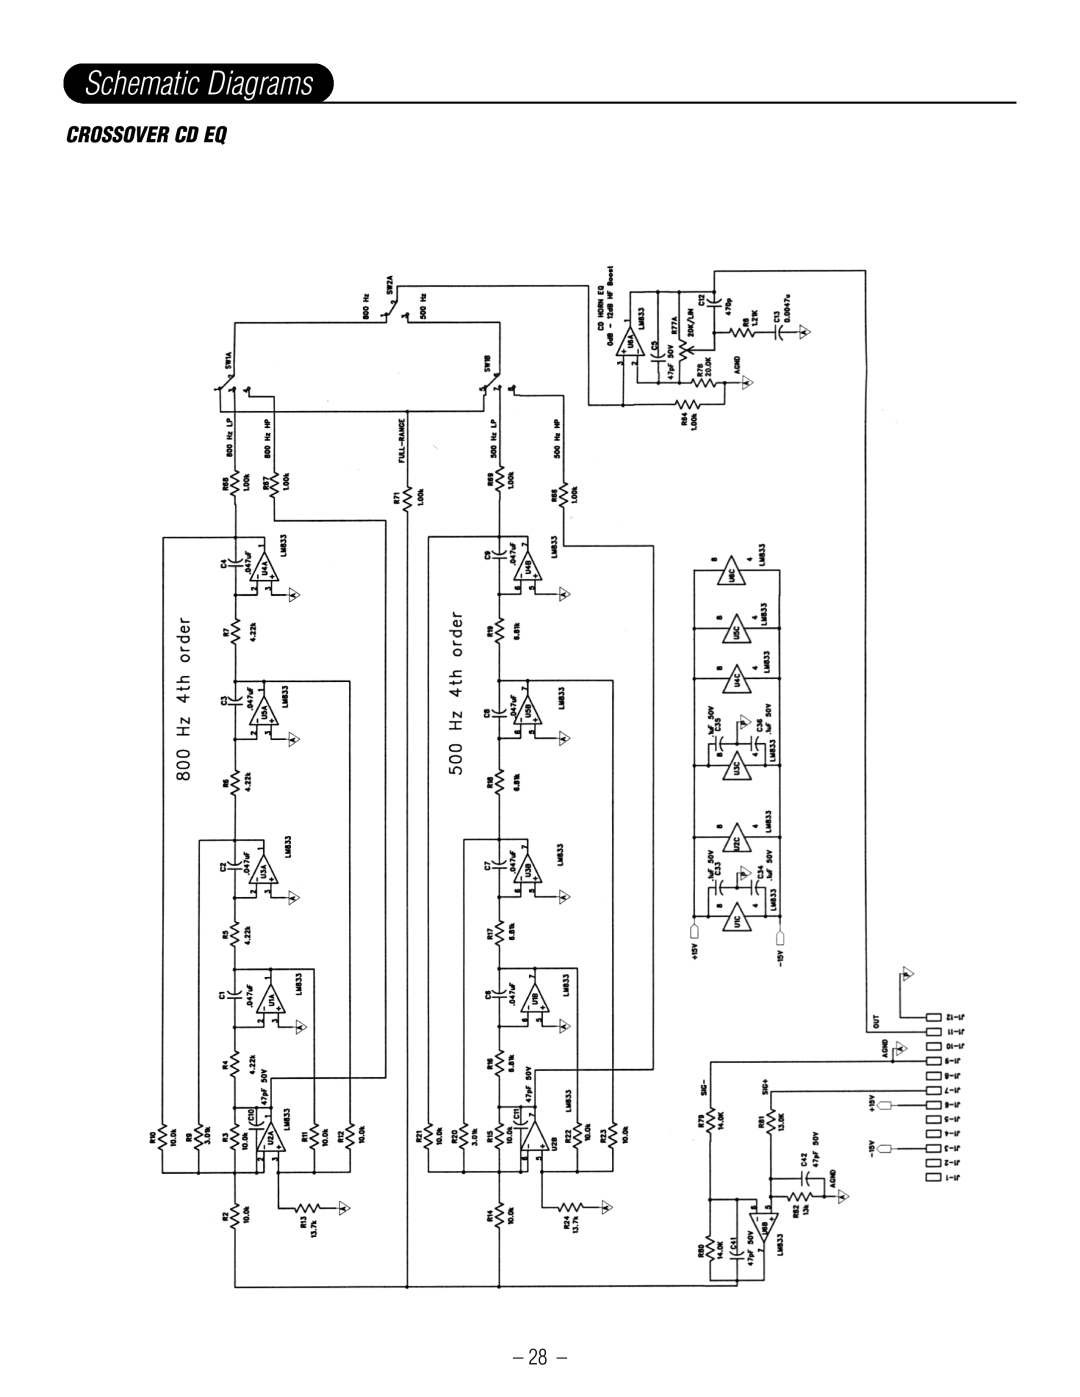 Hafler GX2300CE, GX2600CE manual Schematic Diagrams, Crossover Cd Eq 